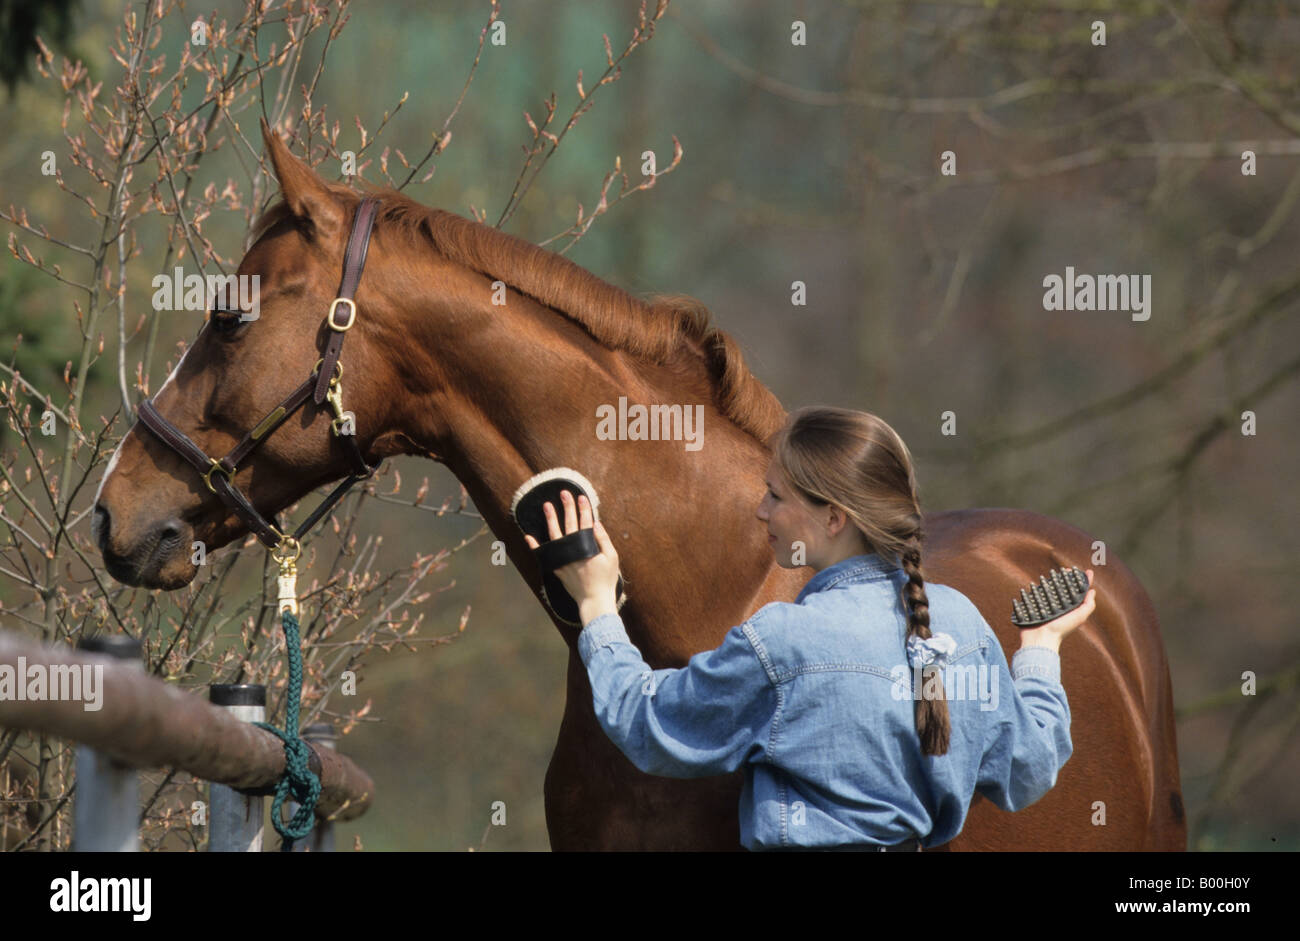 Girl grooming horse (Equus caballus) Stock Photo